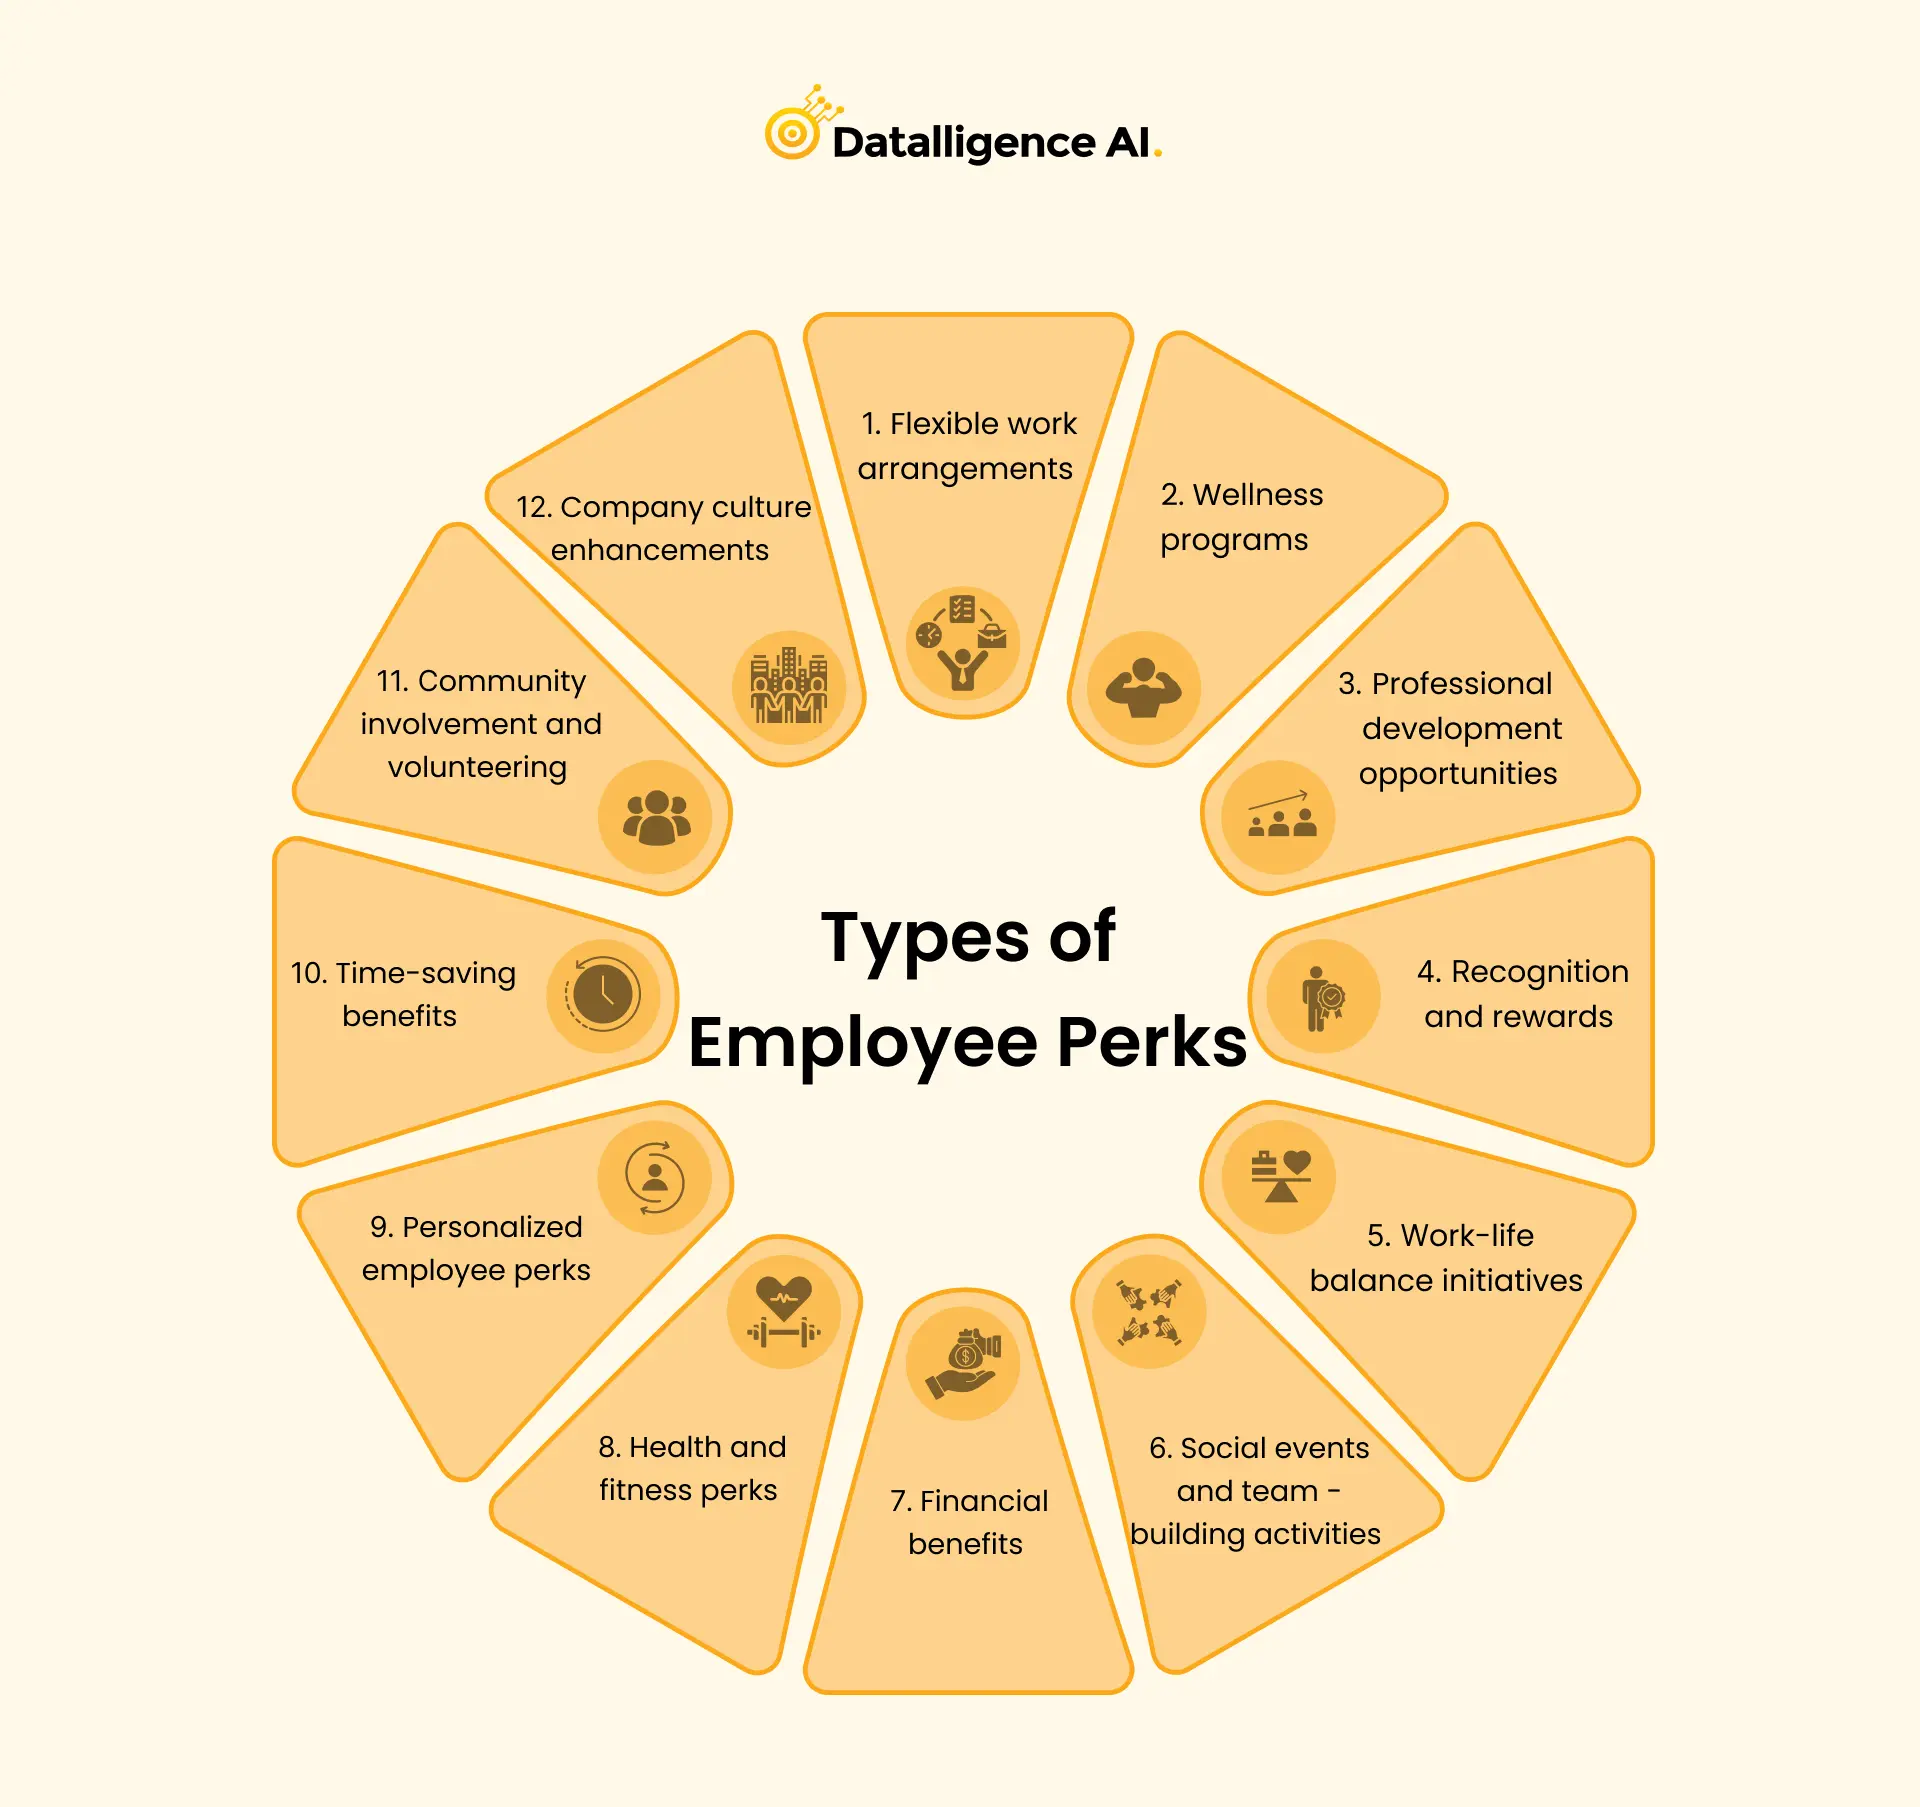 Types of Employee Perks